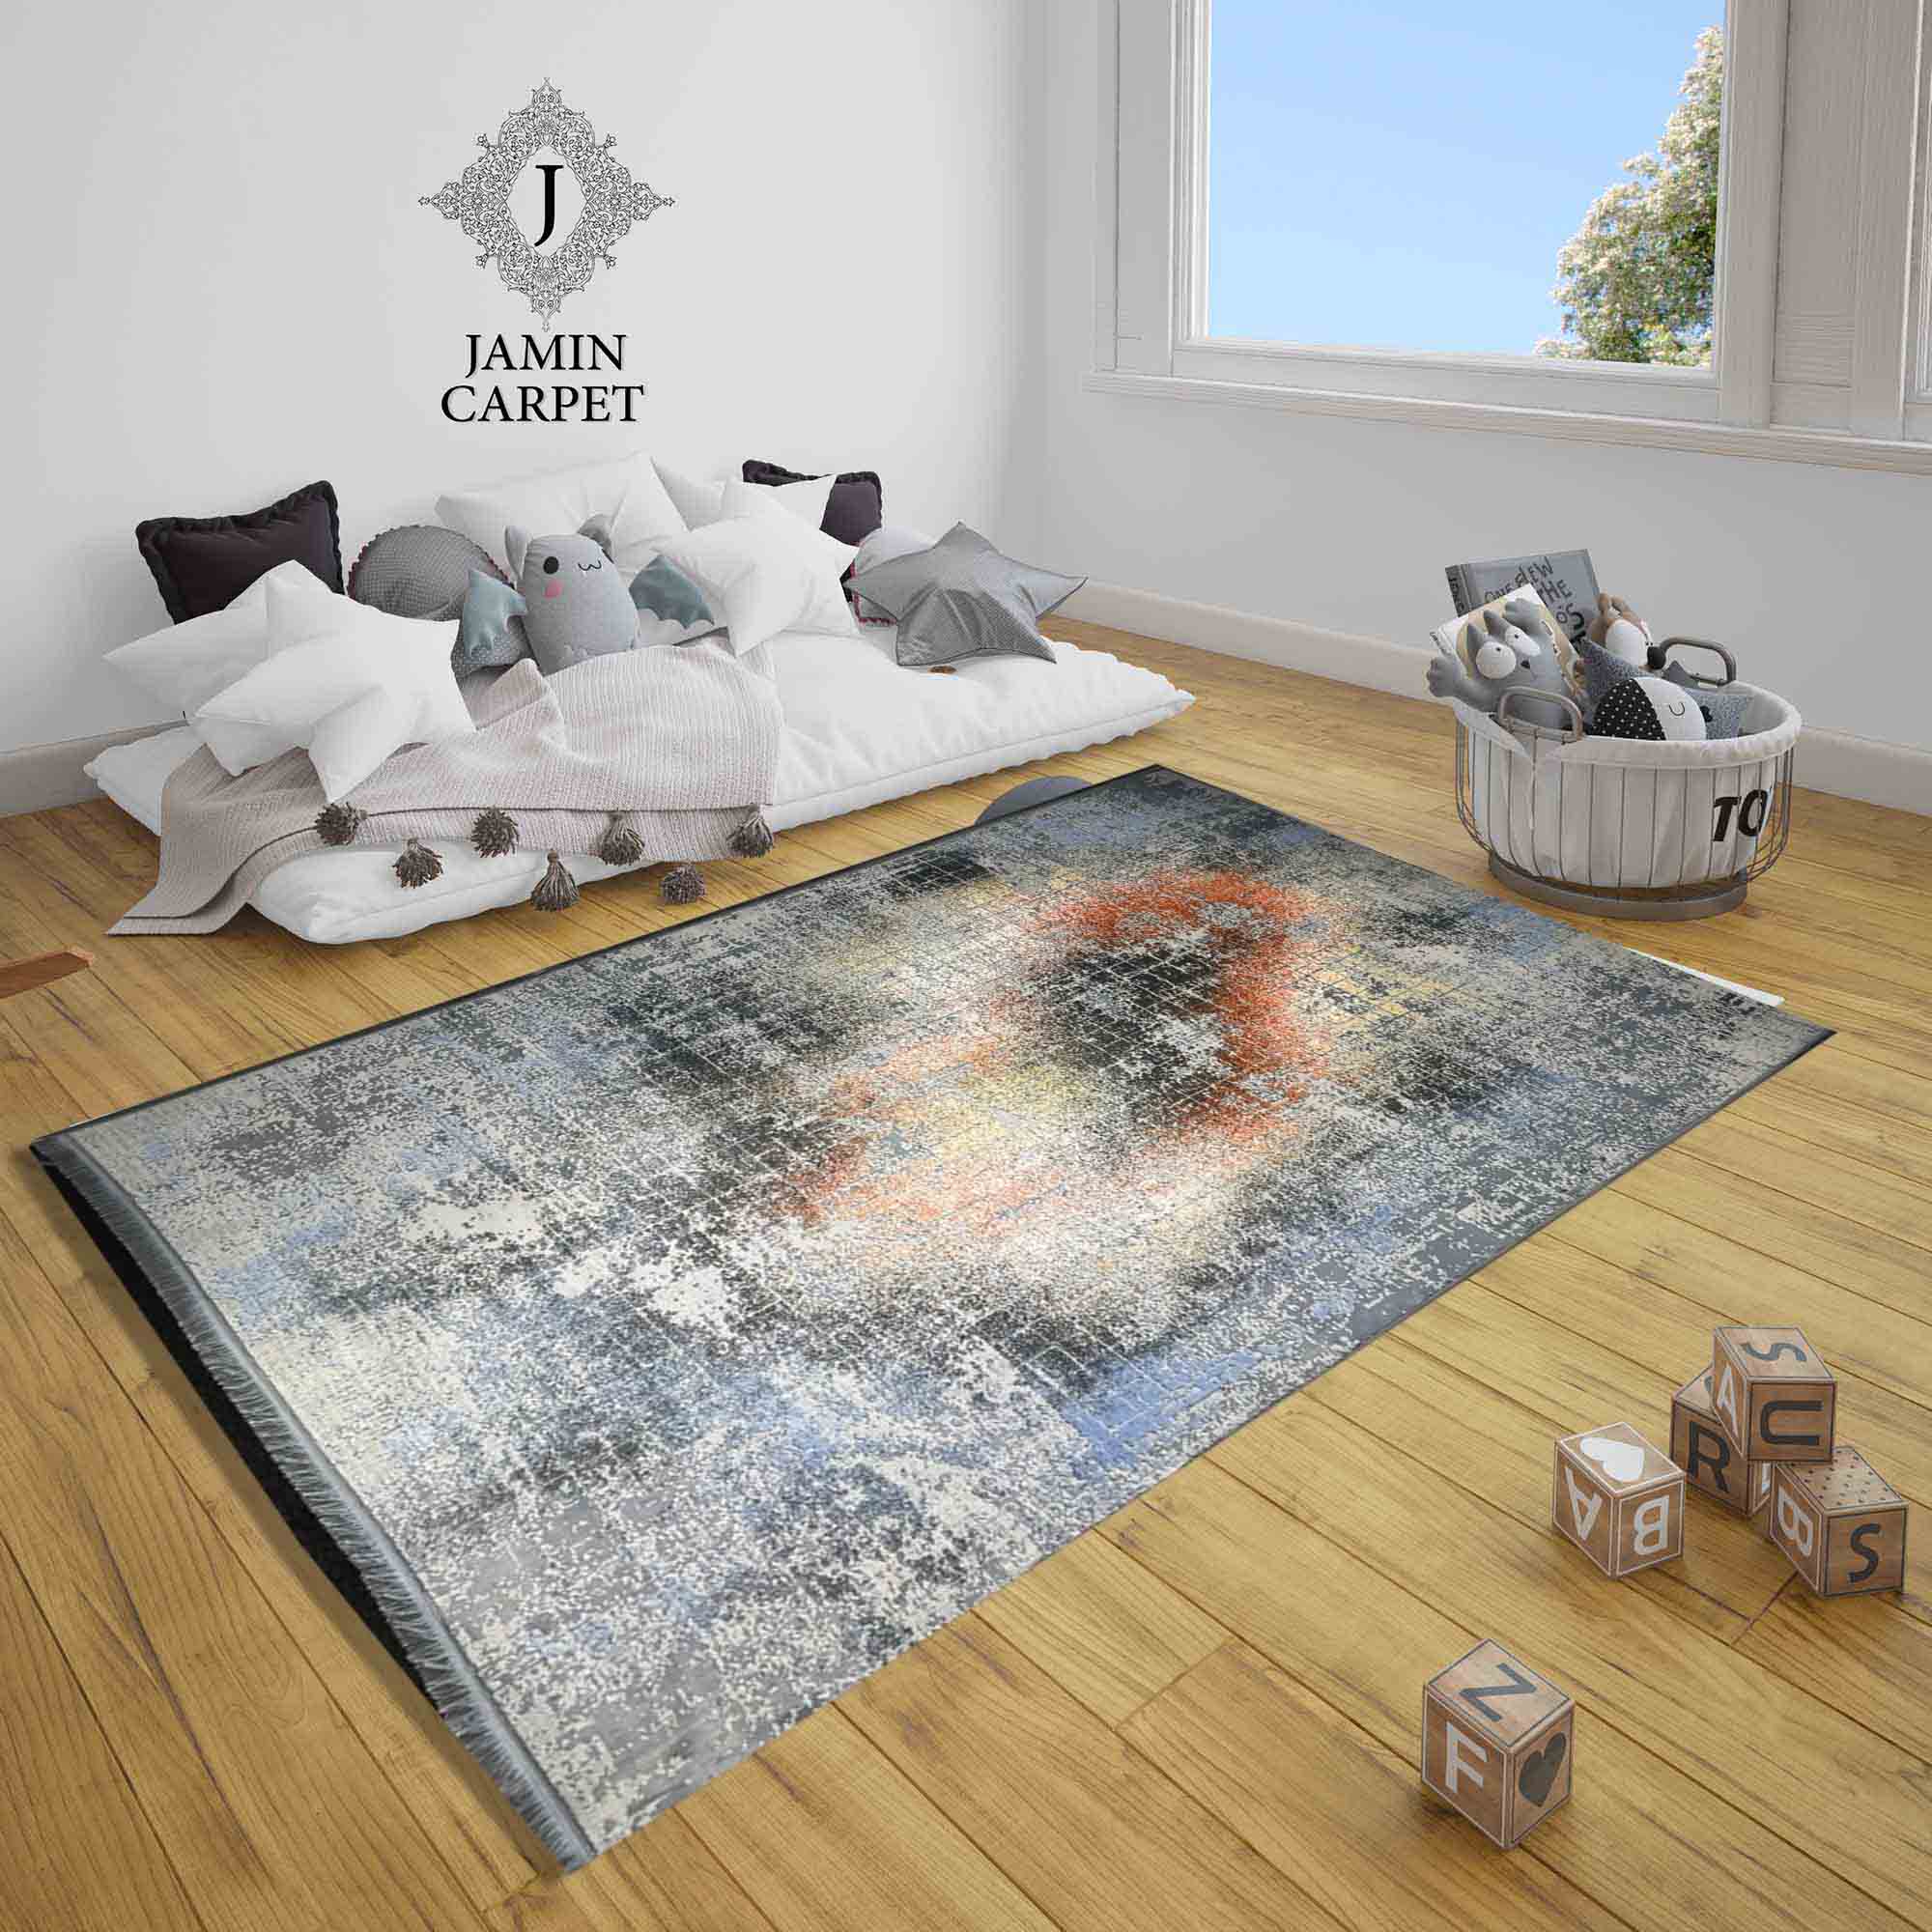 Fantasy carpet, code 230, comb 400, density 1800, all acrylic